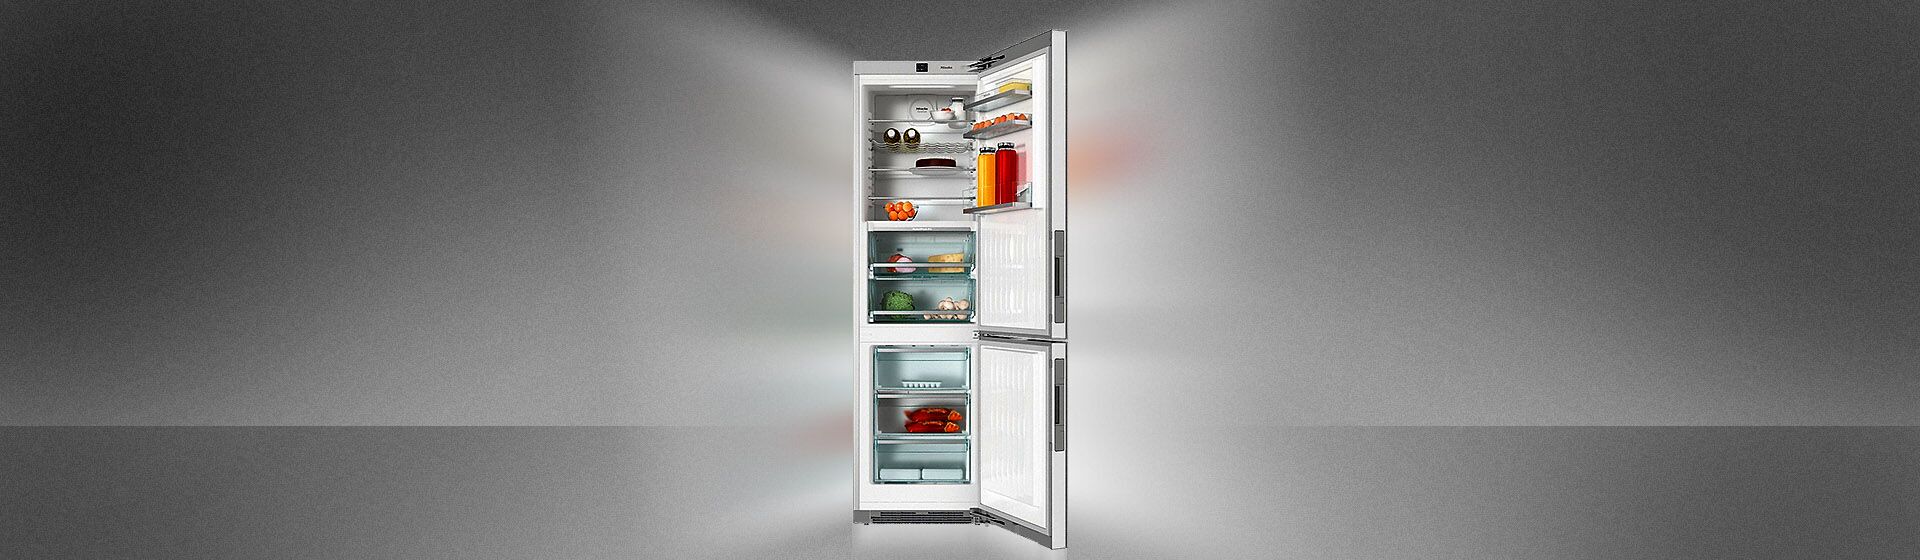 Характеристики немецких холодильников марки Miele